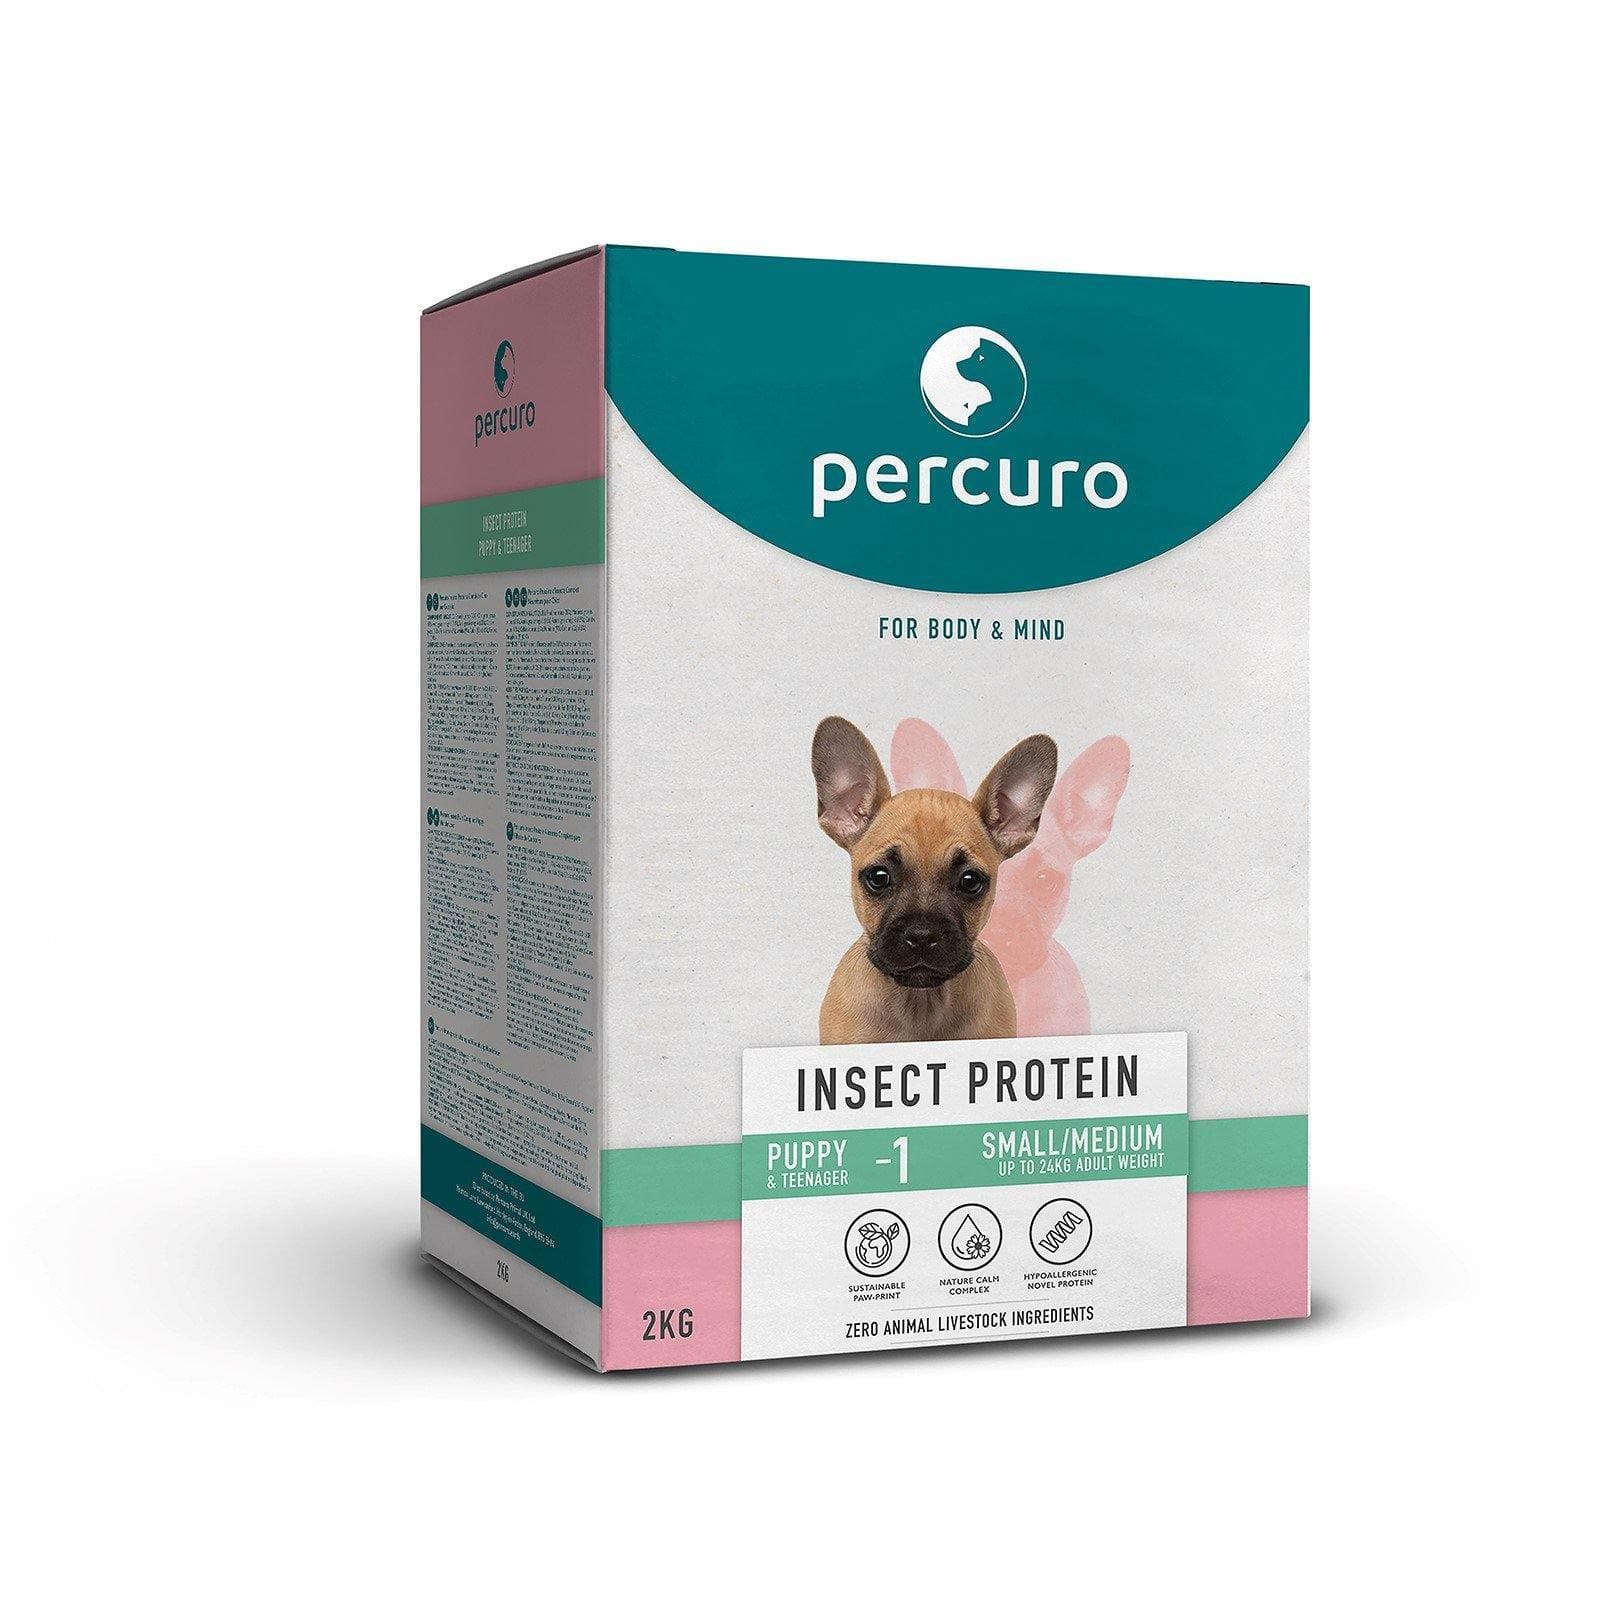 Percuro Puppy Small/Medium Breed Dry Dog Food